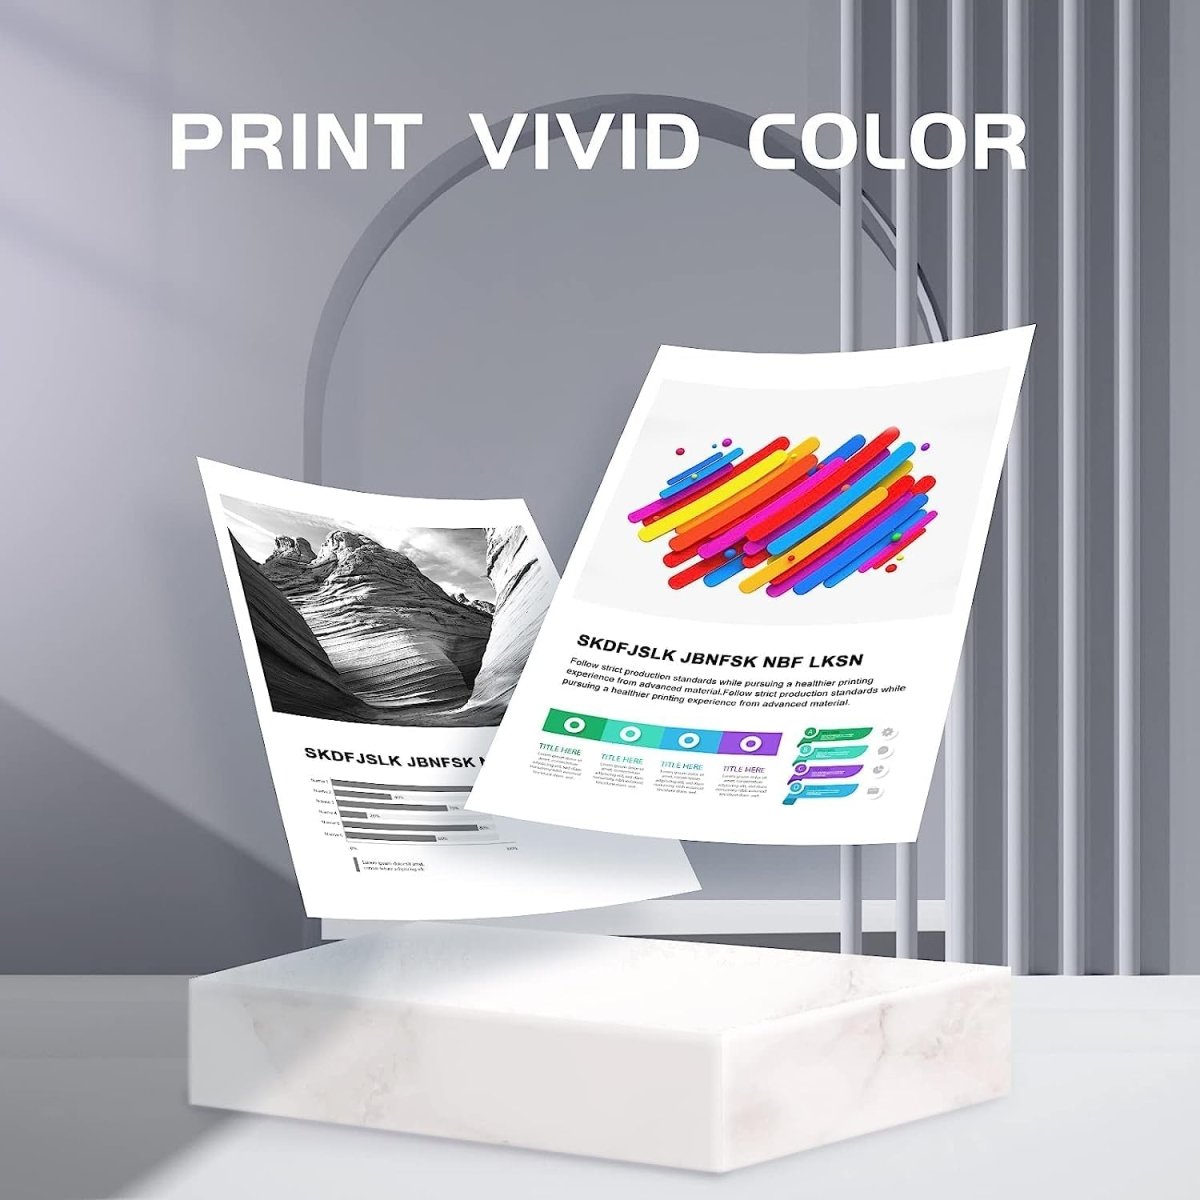 Remanufactured Epson 222xl Ink Cartridges (Black, Cyan, Magenta, Yellow, 4-Pack ) - Linford Office:Printer Ink & Toner Cartridge